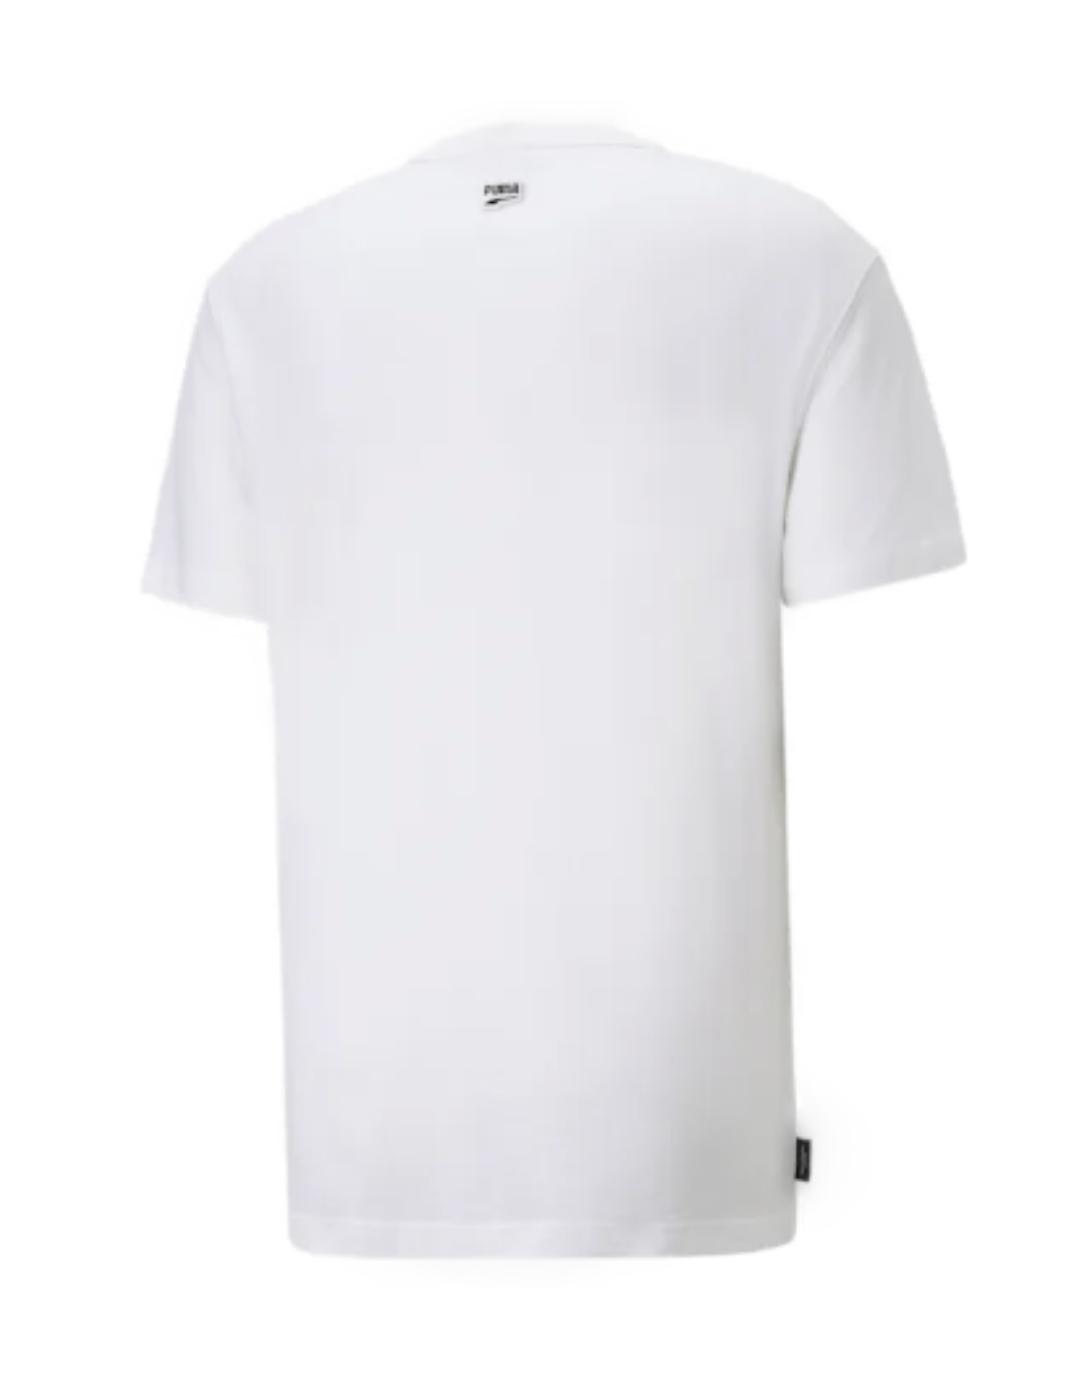 Camiseta Puma Dowtown blanco manga corta para hombre